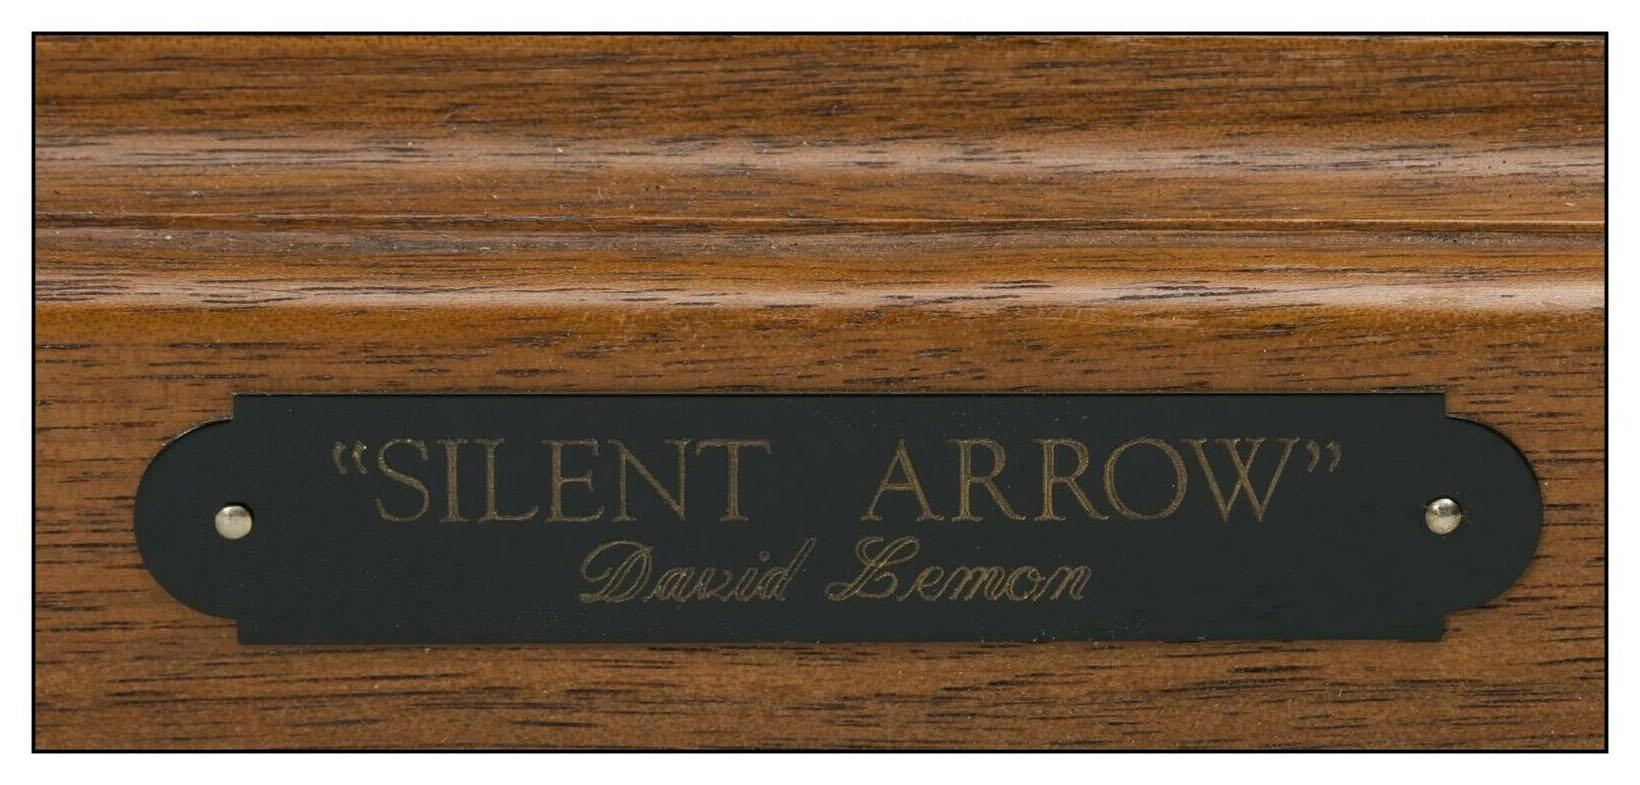 David Lemon Native American Large Bronze Sculpture Silent Arrow Signed Artwork For Sale 3